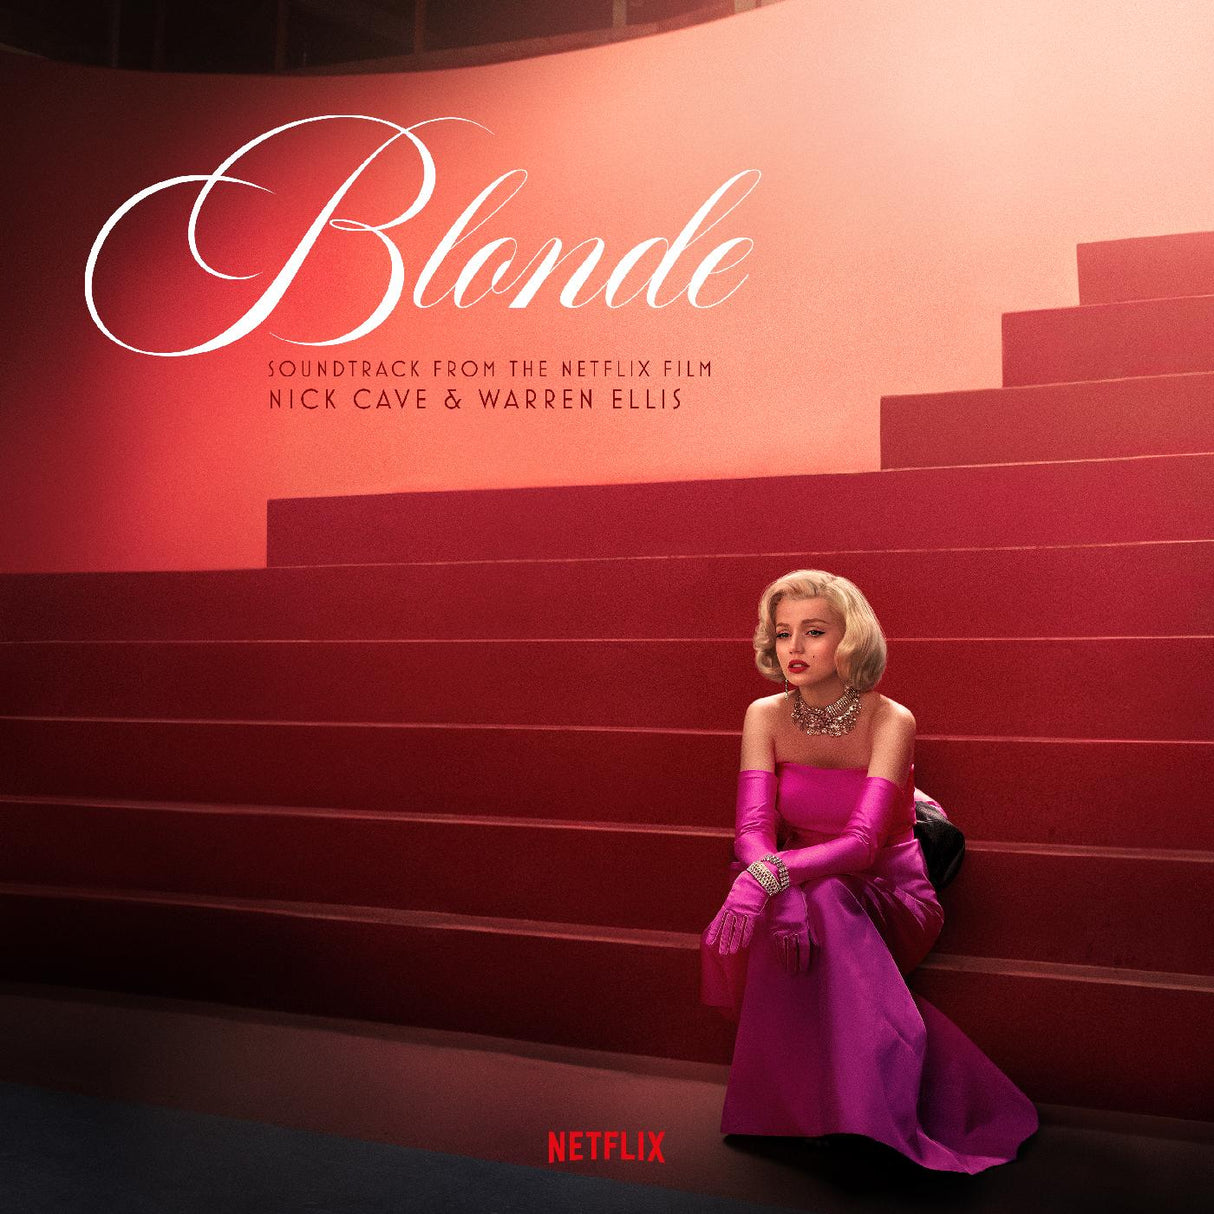 Blonde (Soundtrack From The Netflix Film) (PINK VINYL) [Vinyl]